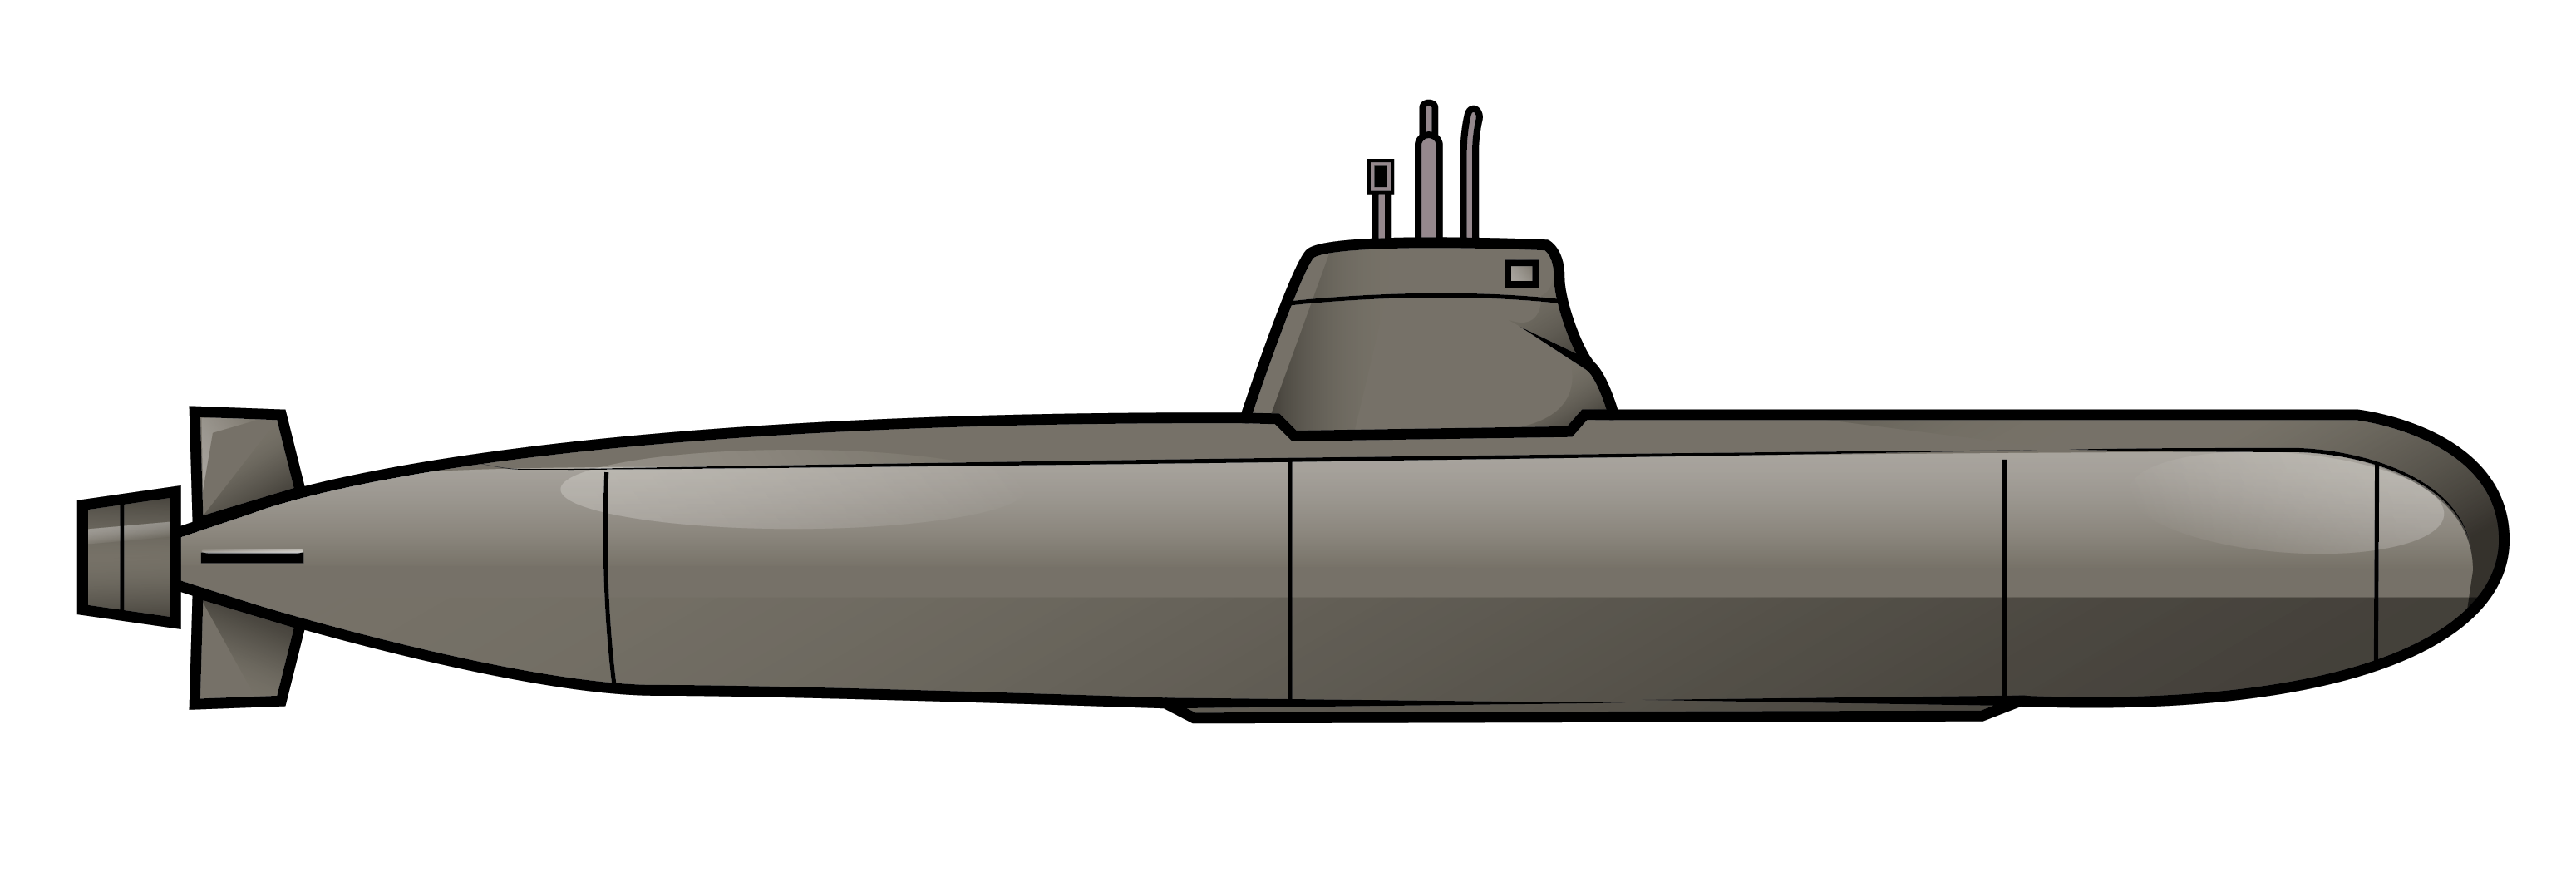 Free Submarine Clip Art u0026middot; submarine6